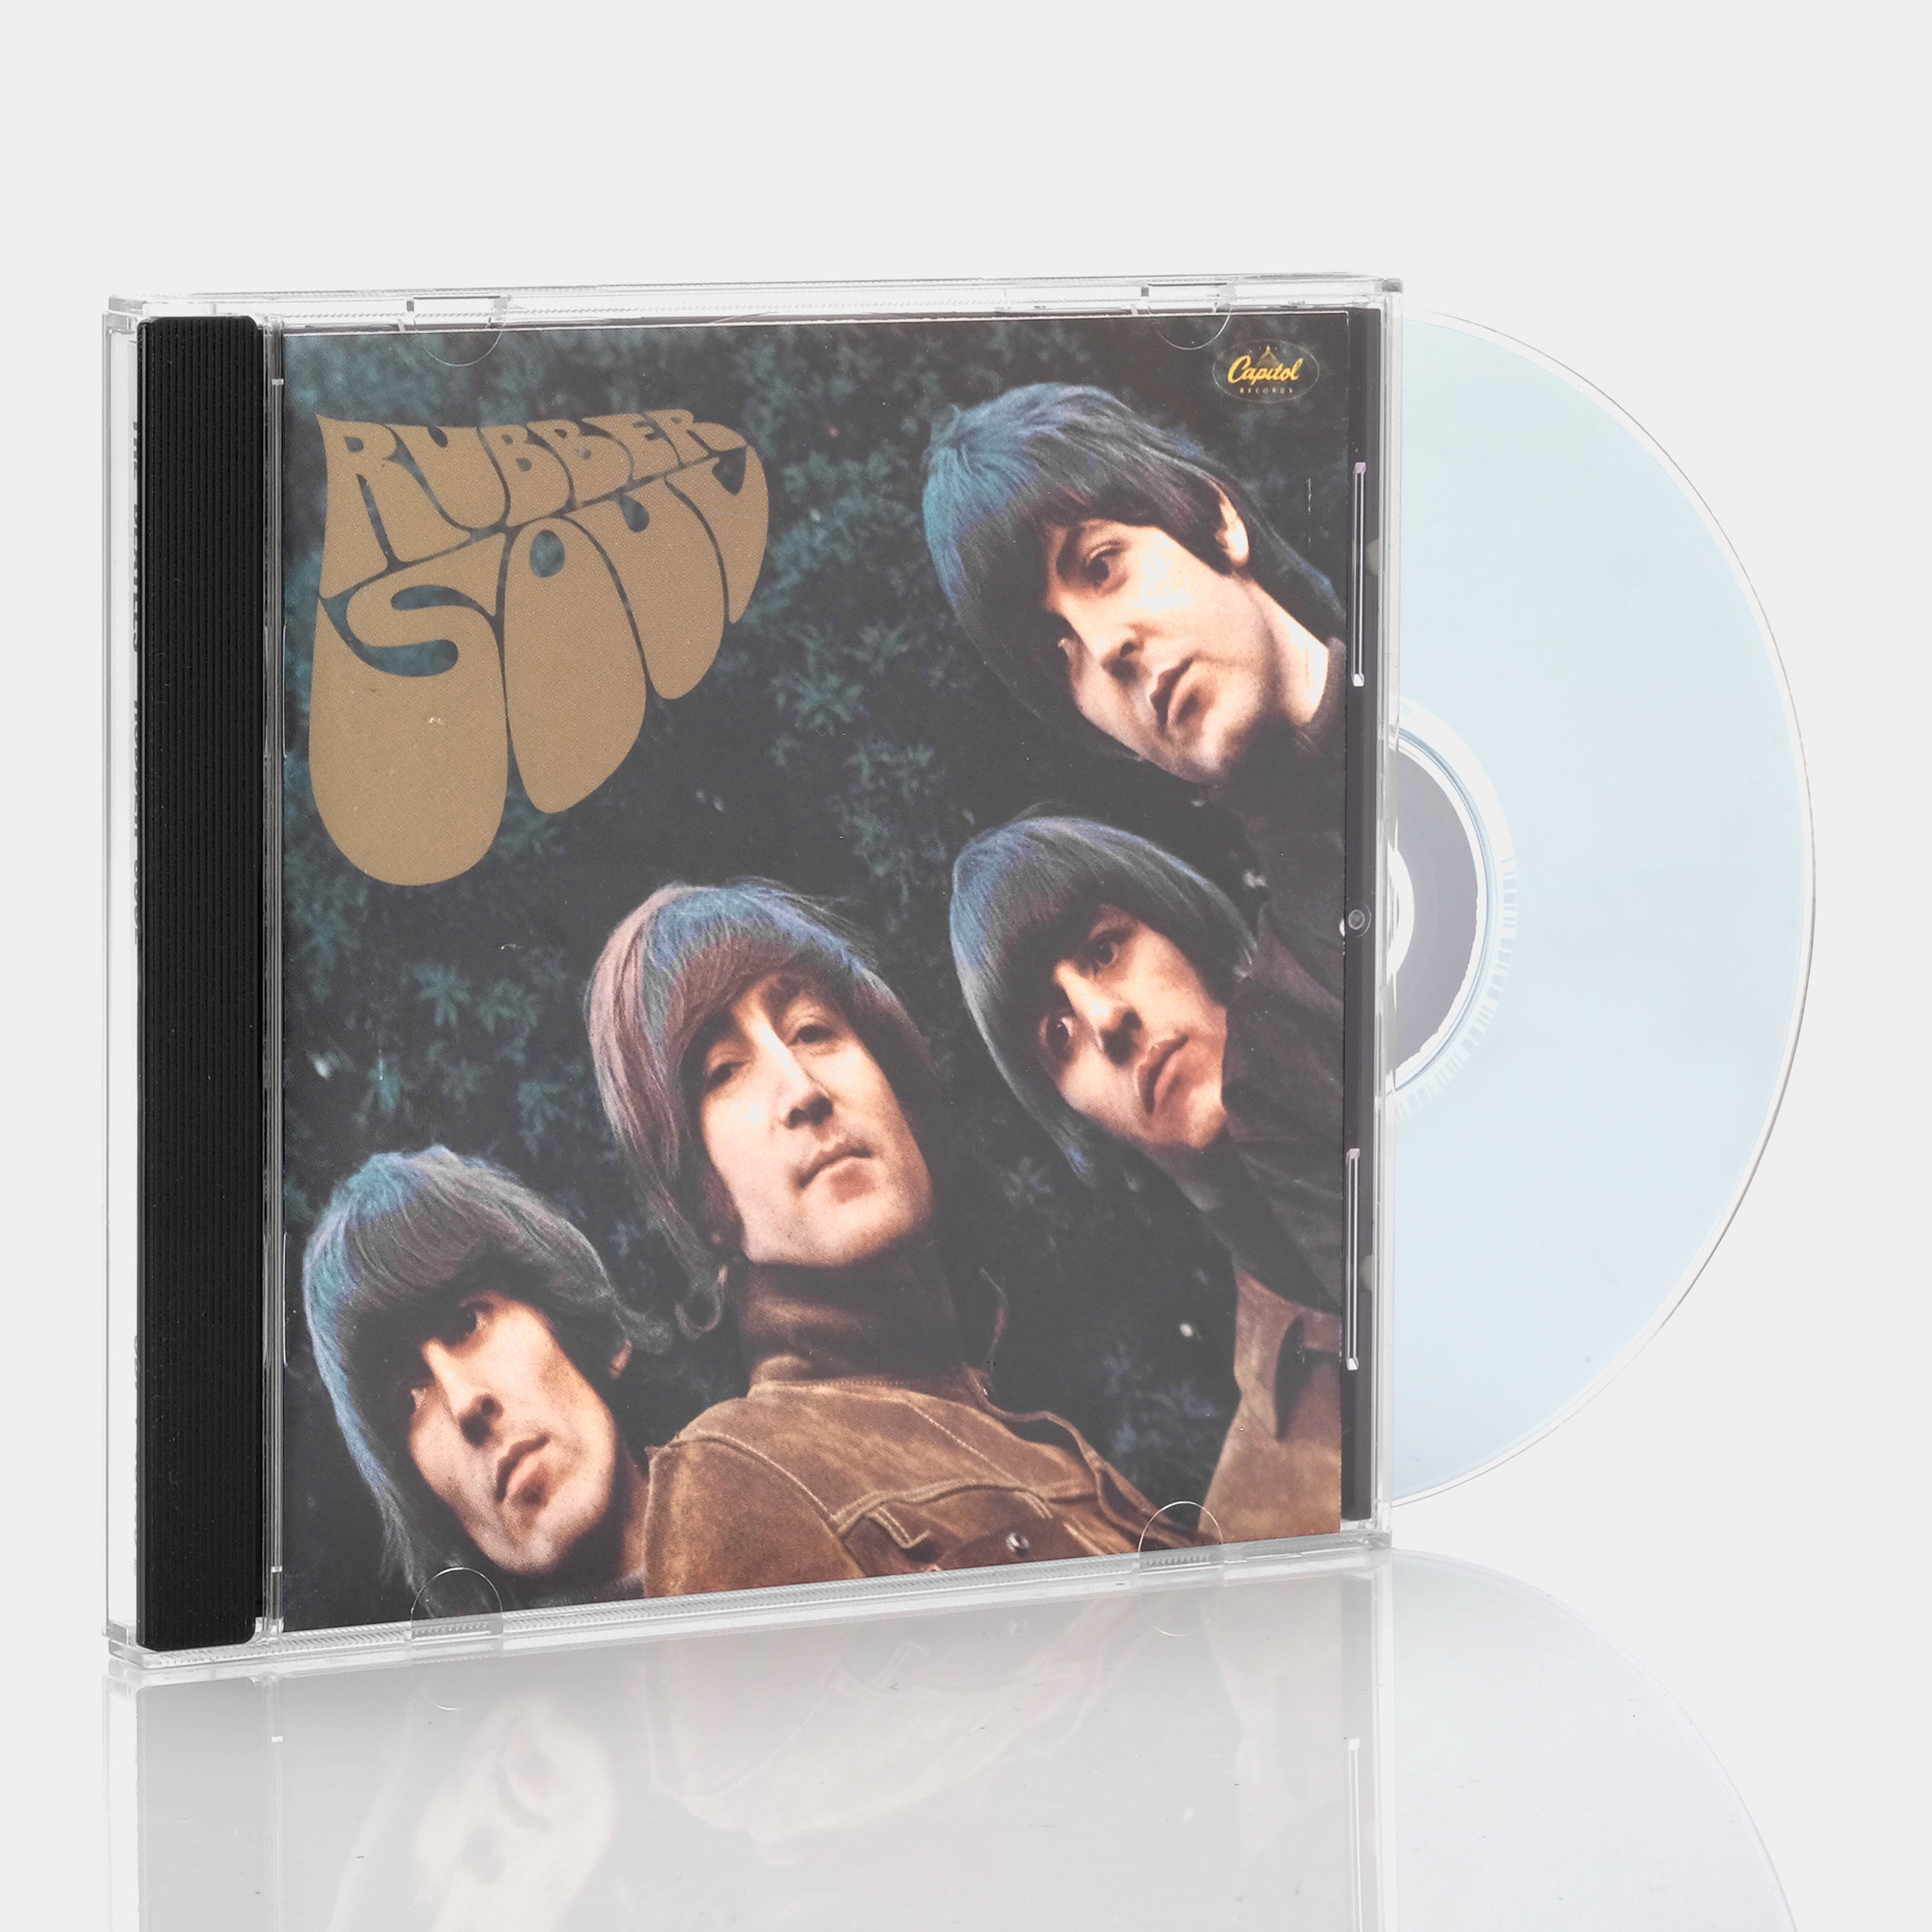 The Beatles - Rubber Soul CD